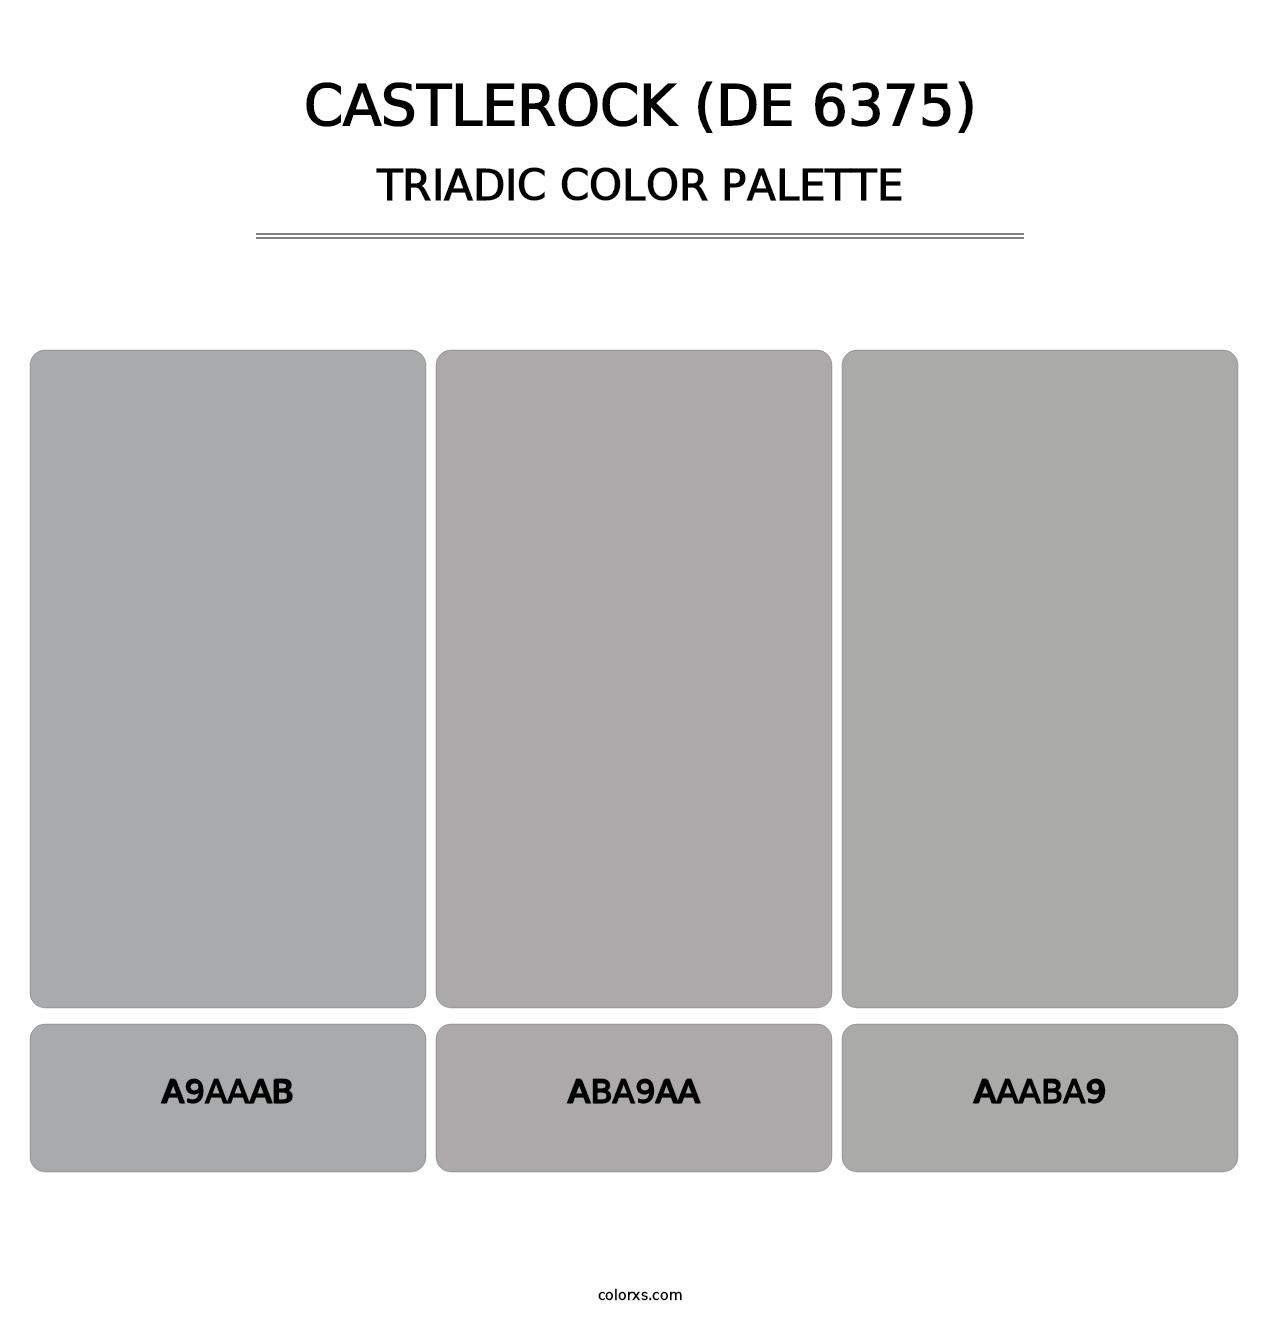 Castlerock (DE 6375) - Triadic Color Palette